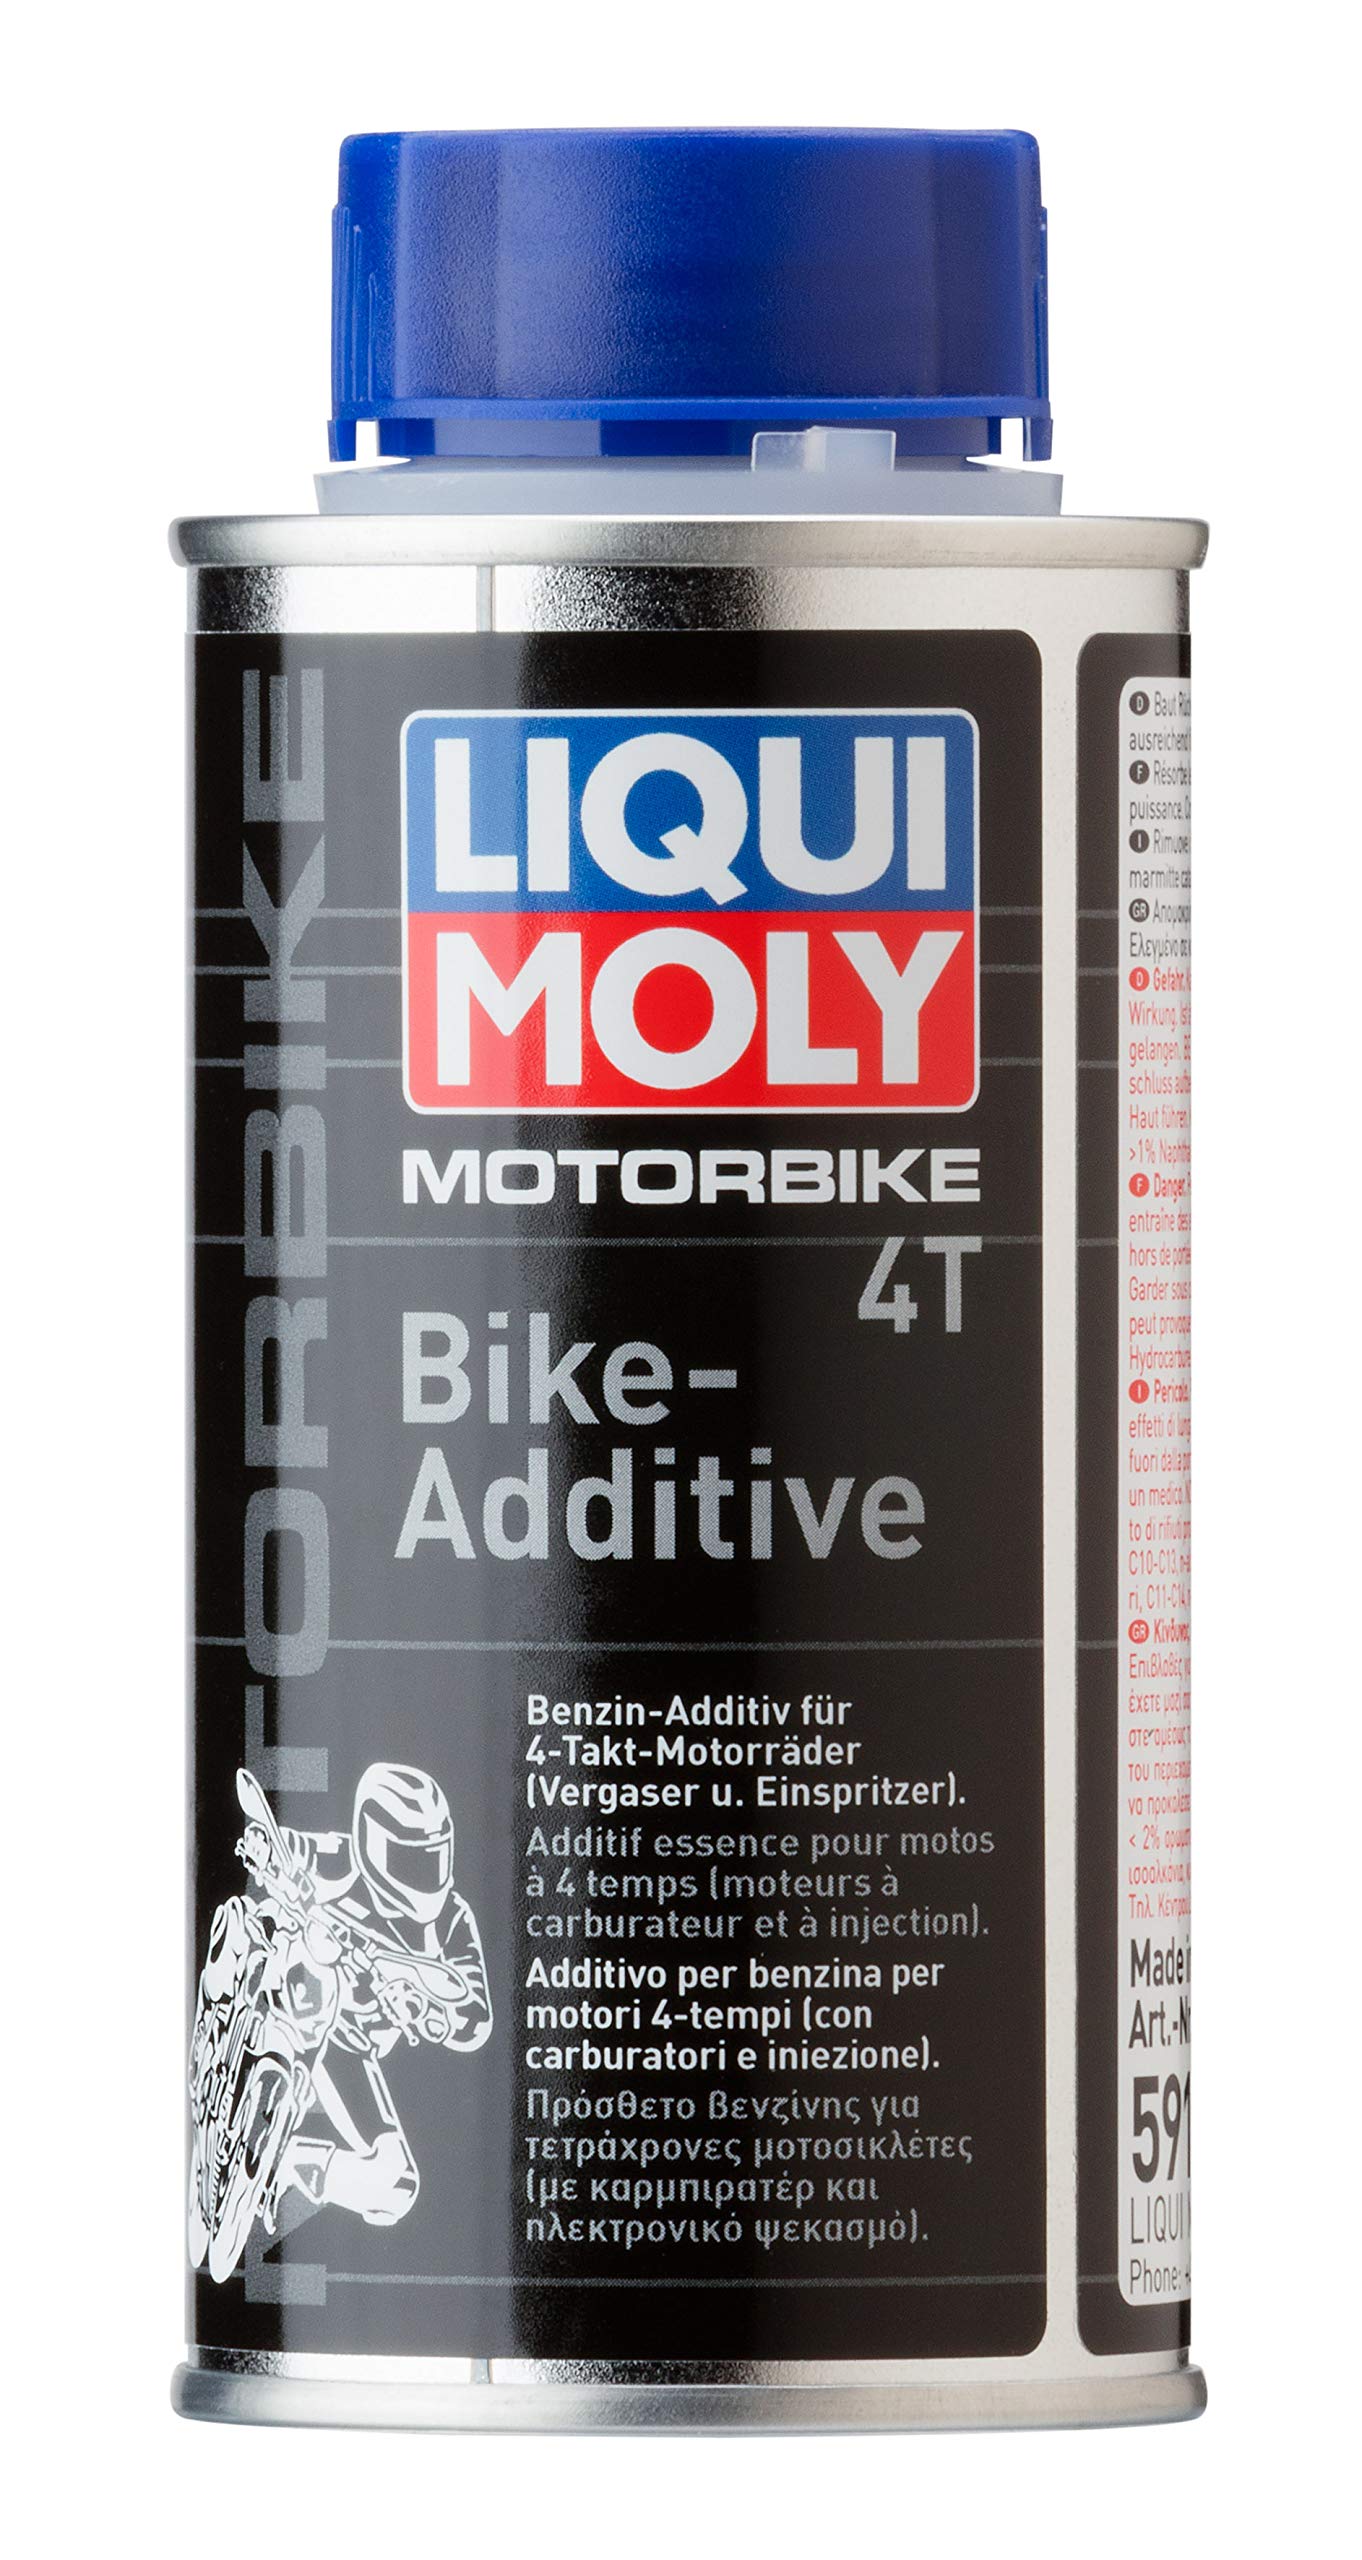 LIQUI MOLY Motorbike 4T Bike-Additive | 125 ml | Motorrad Benzinadditiv | Art.-Nr.: 1581 von Liqui Moly